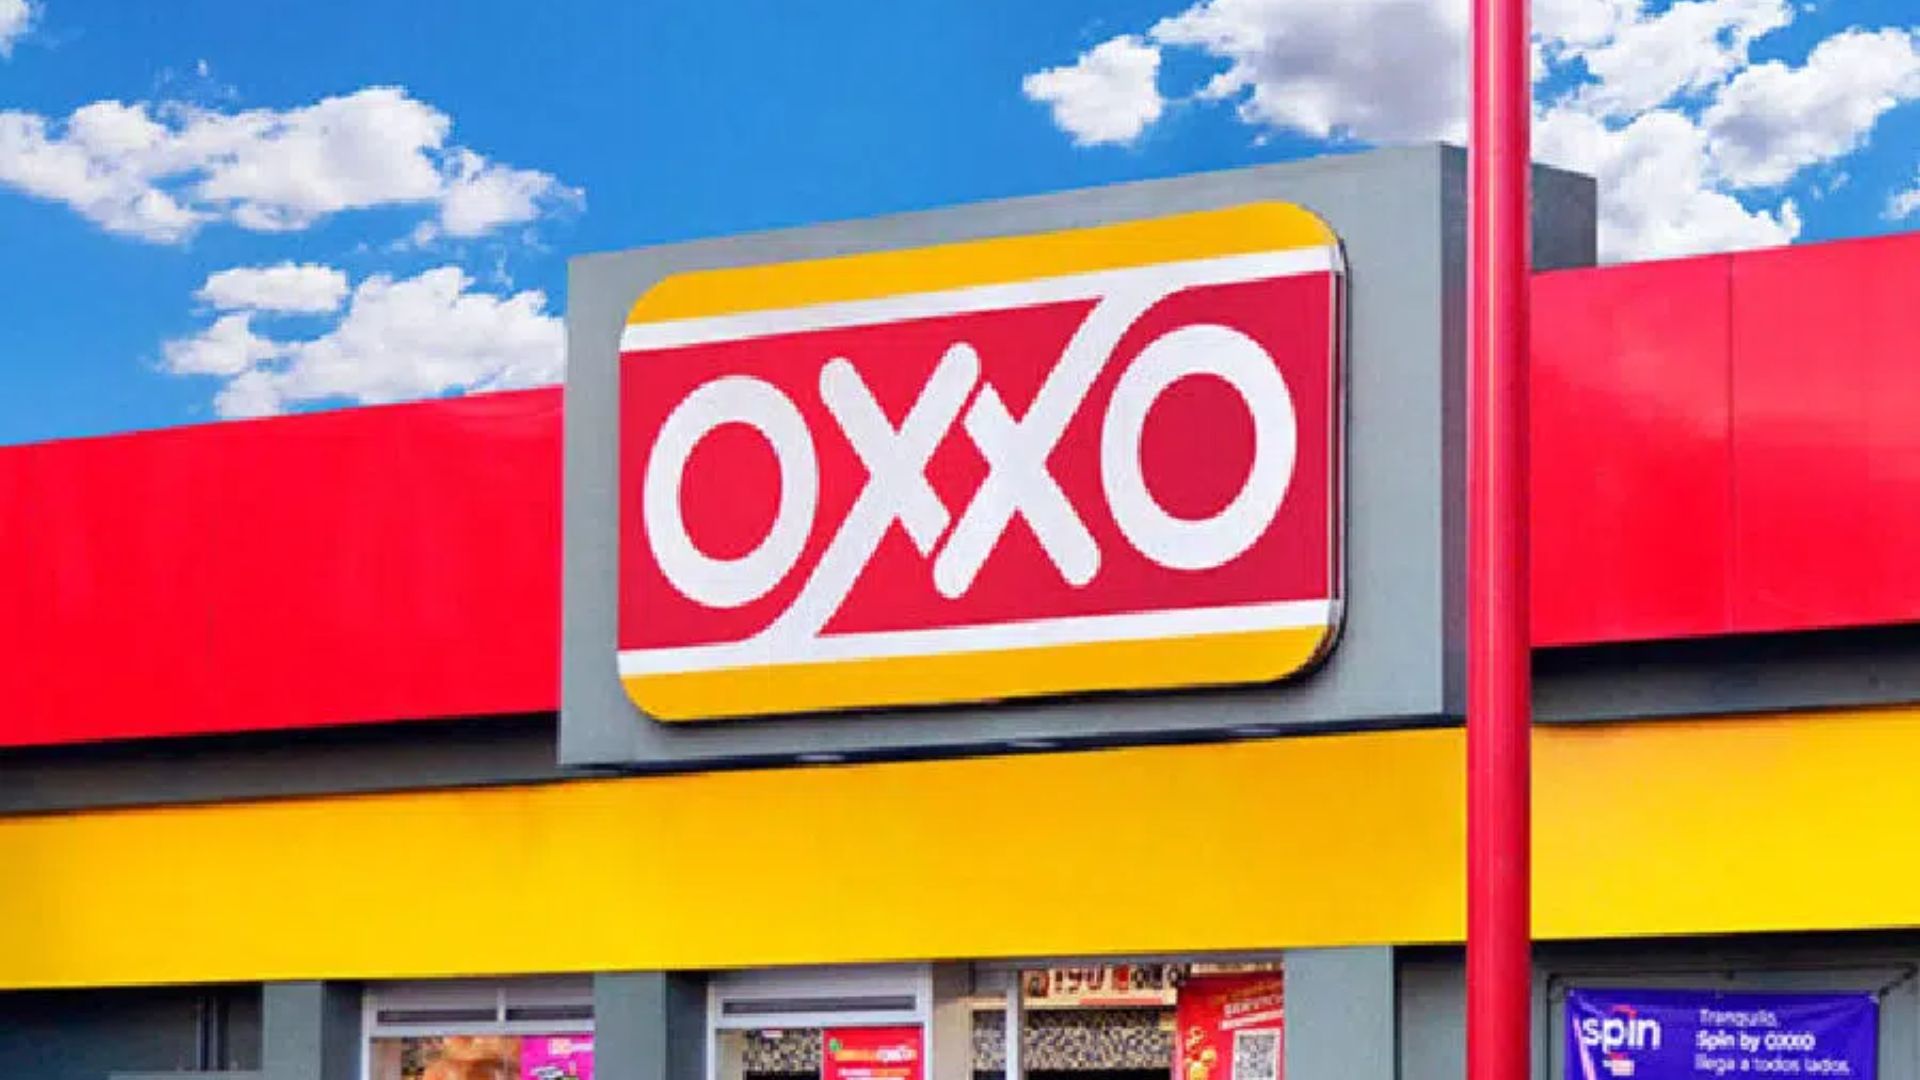 Oxxo del futuro: Tarjeta Spin by Oxxo